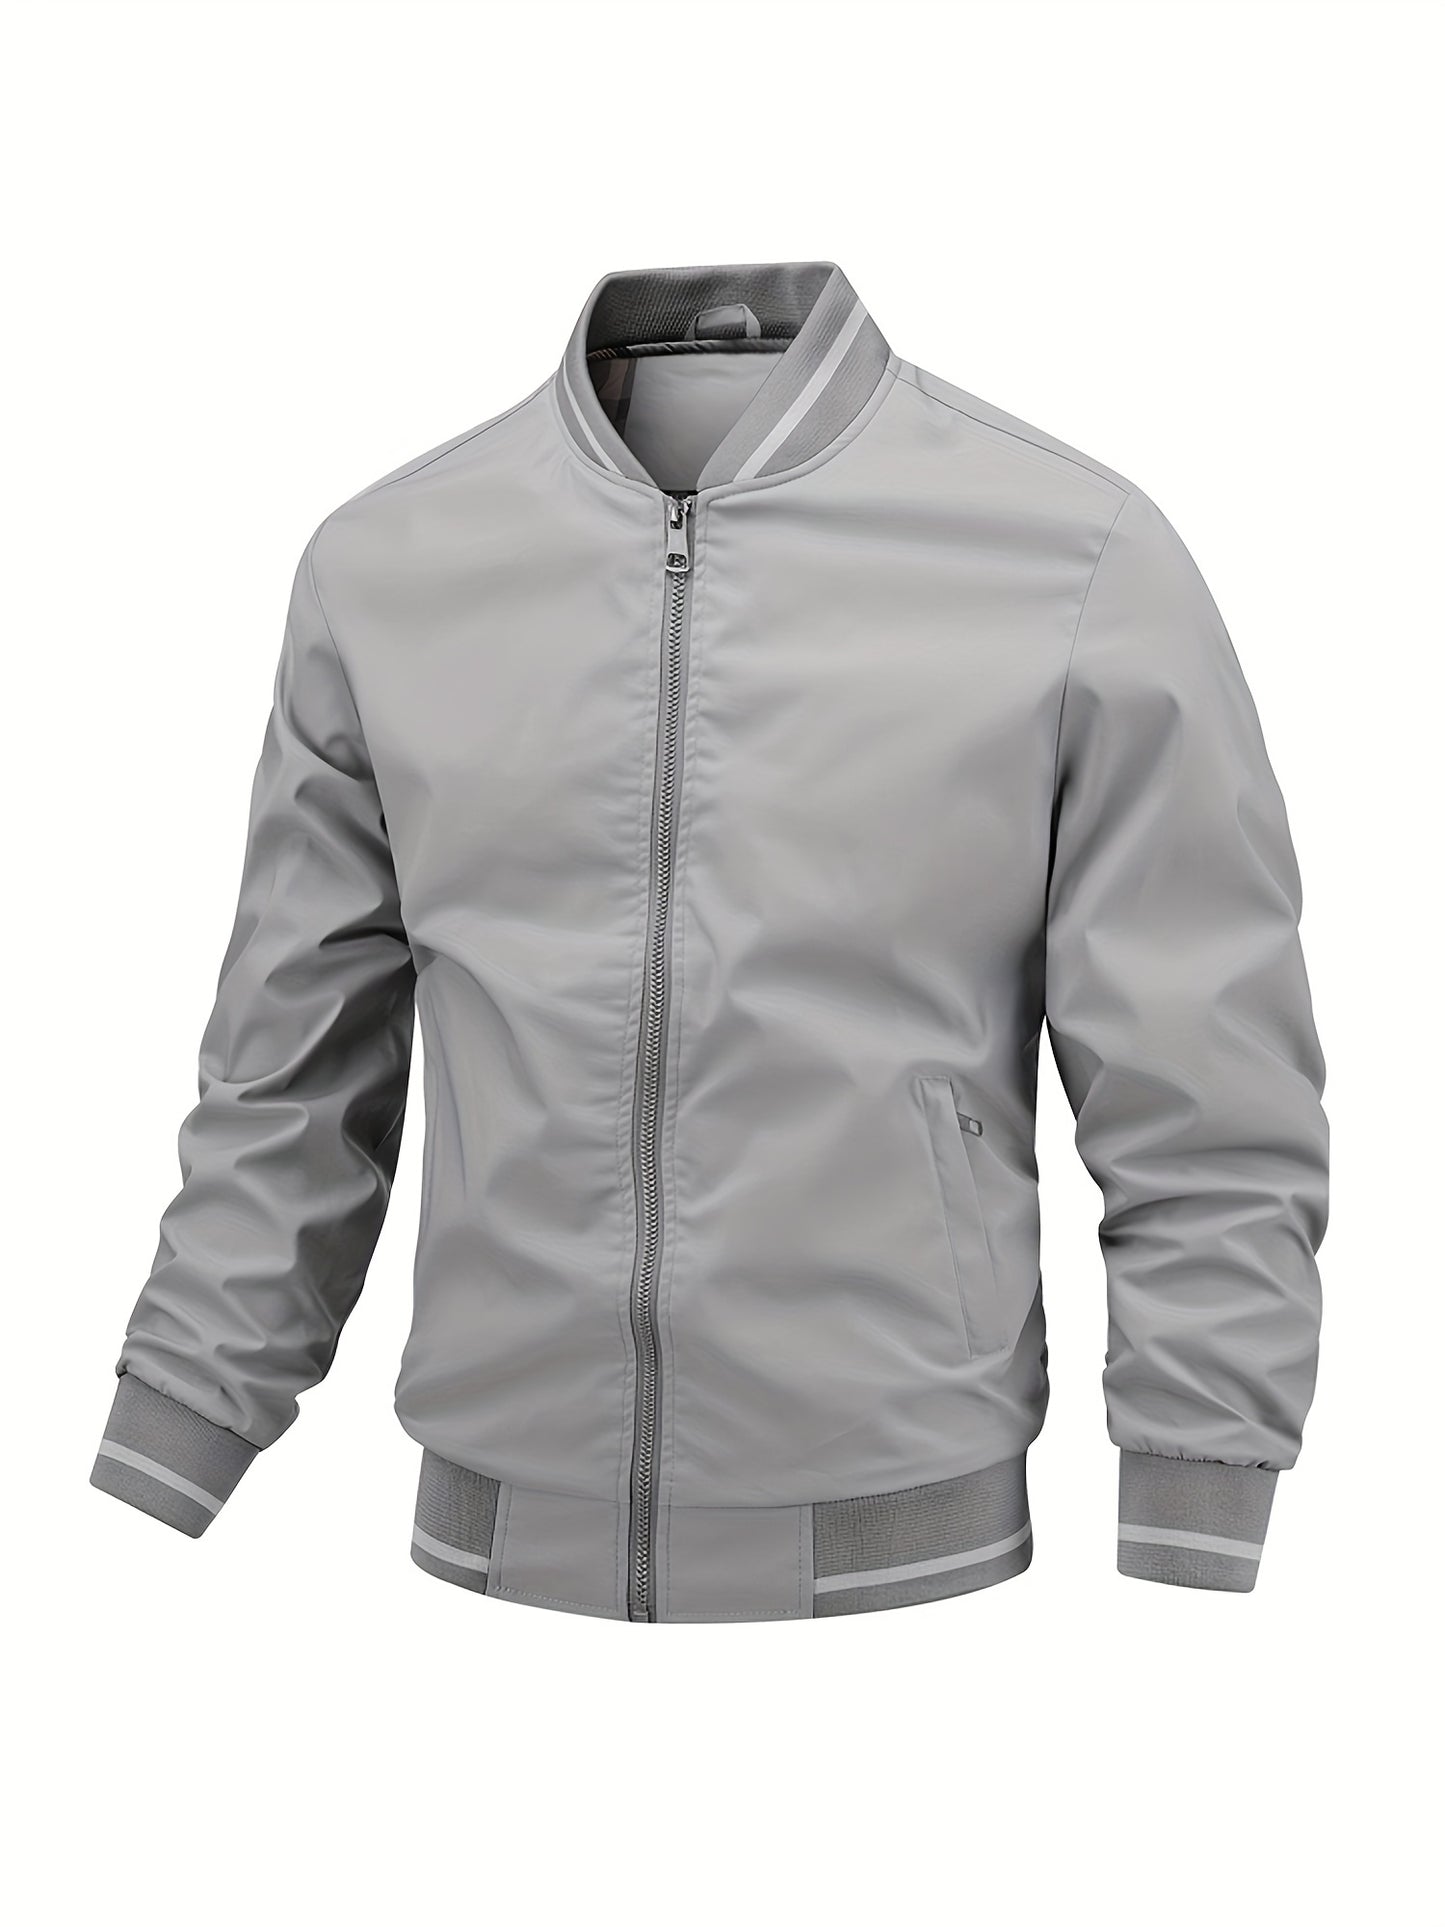 Men's Casual Zipper Long Sleeve Stand Collar Pockets Jackets For Fall & Winter